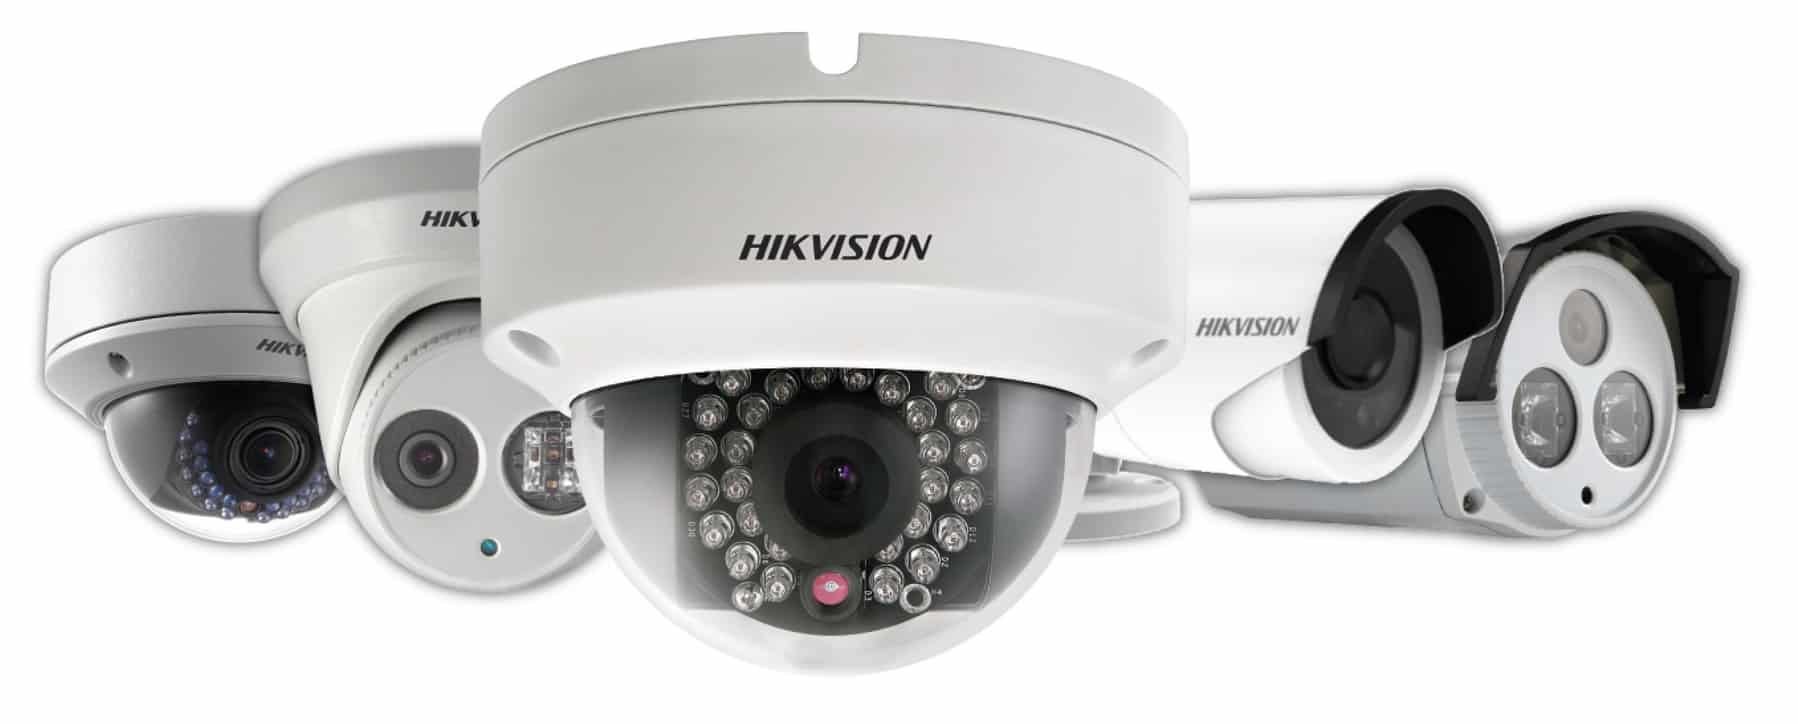 HIKVision CCTV Camera Ranges